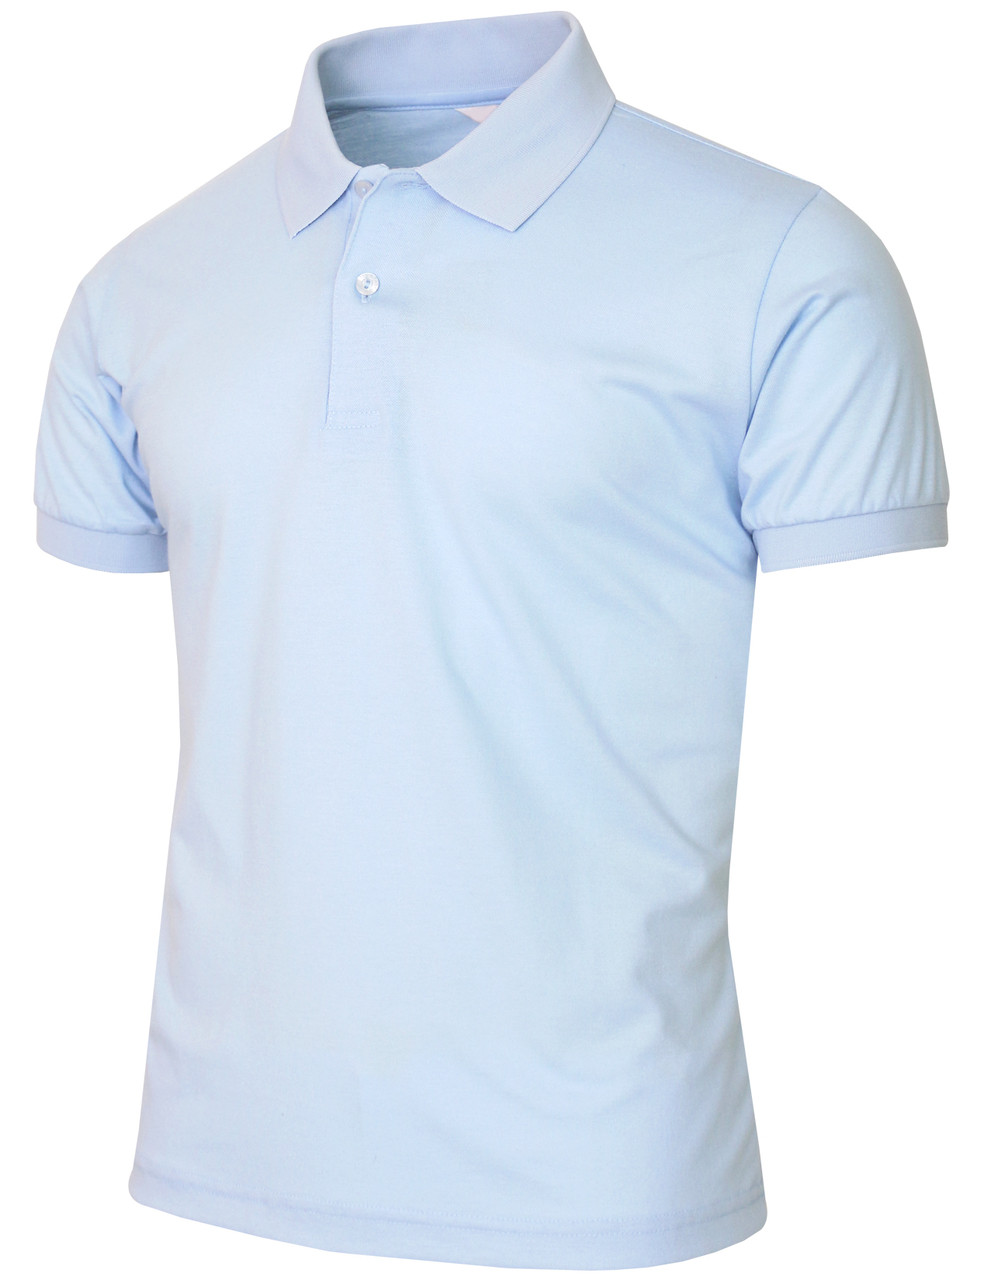 Unisex Pique solid Polo Shirt